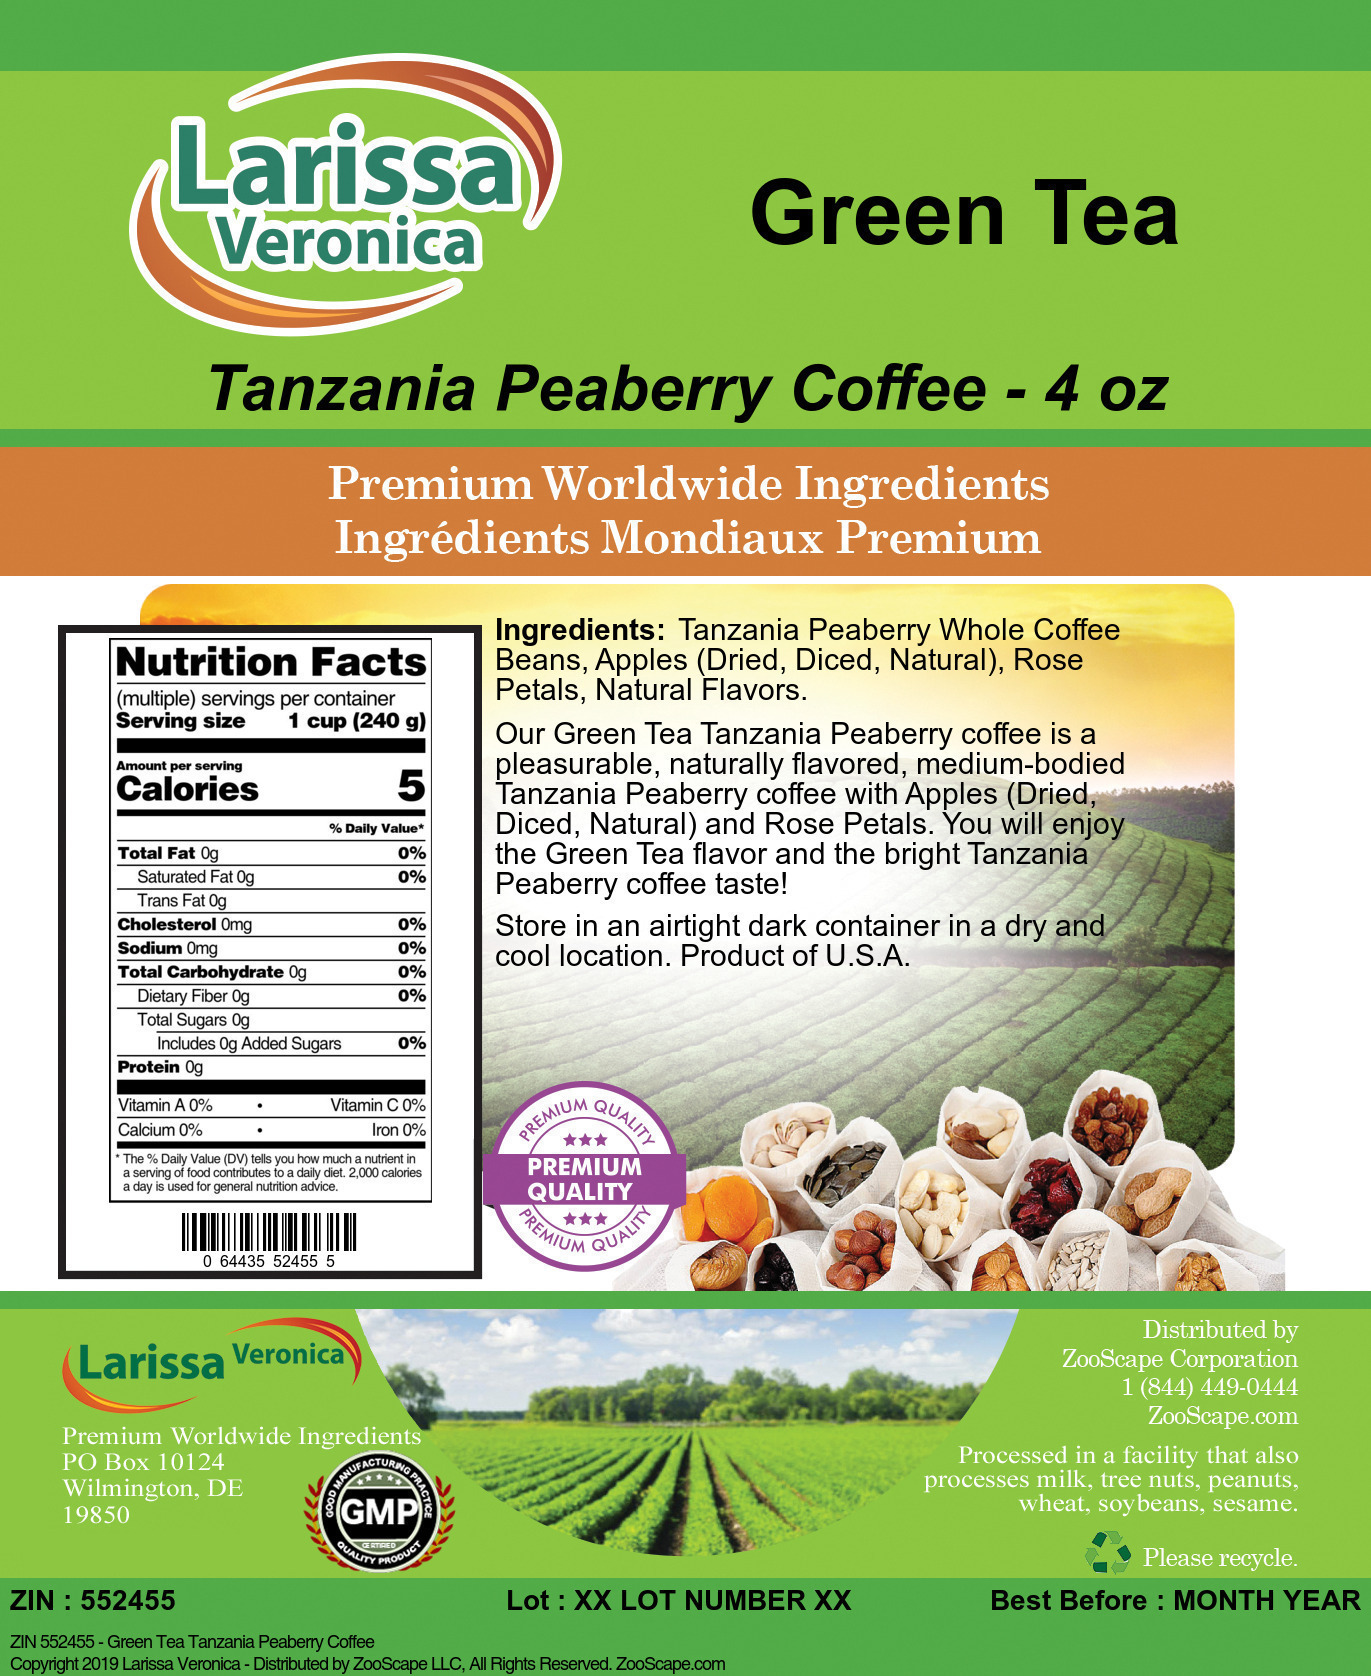 Green Tea Tanzania Peaberry Coffee - Label